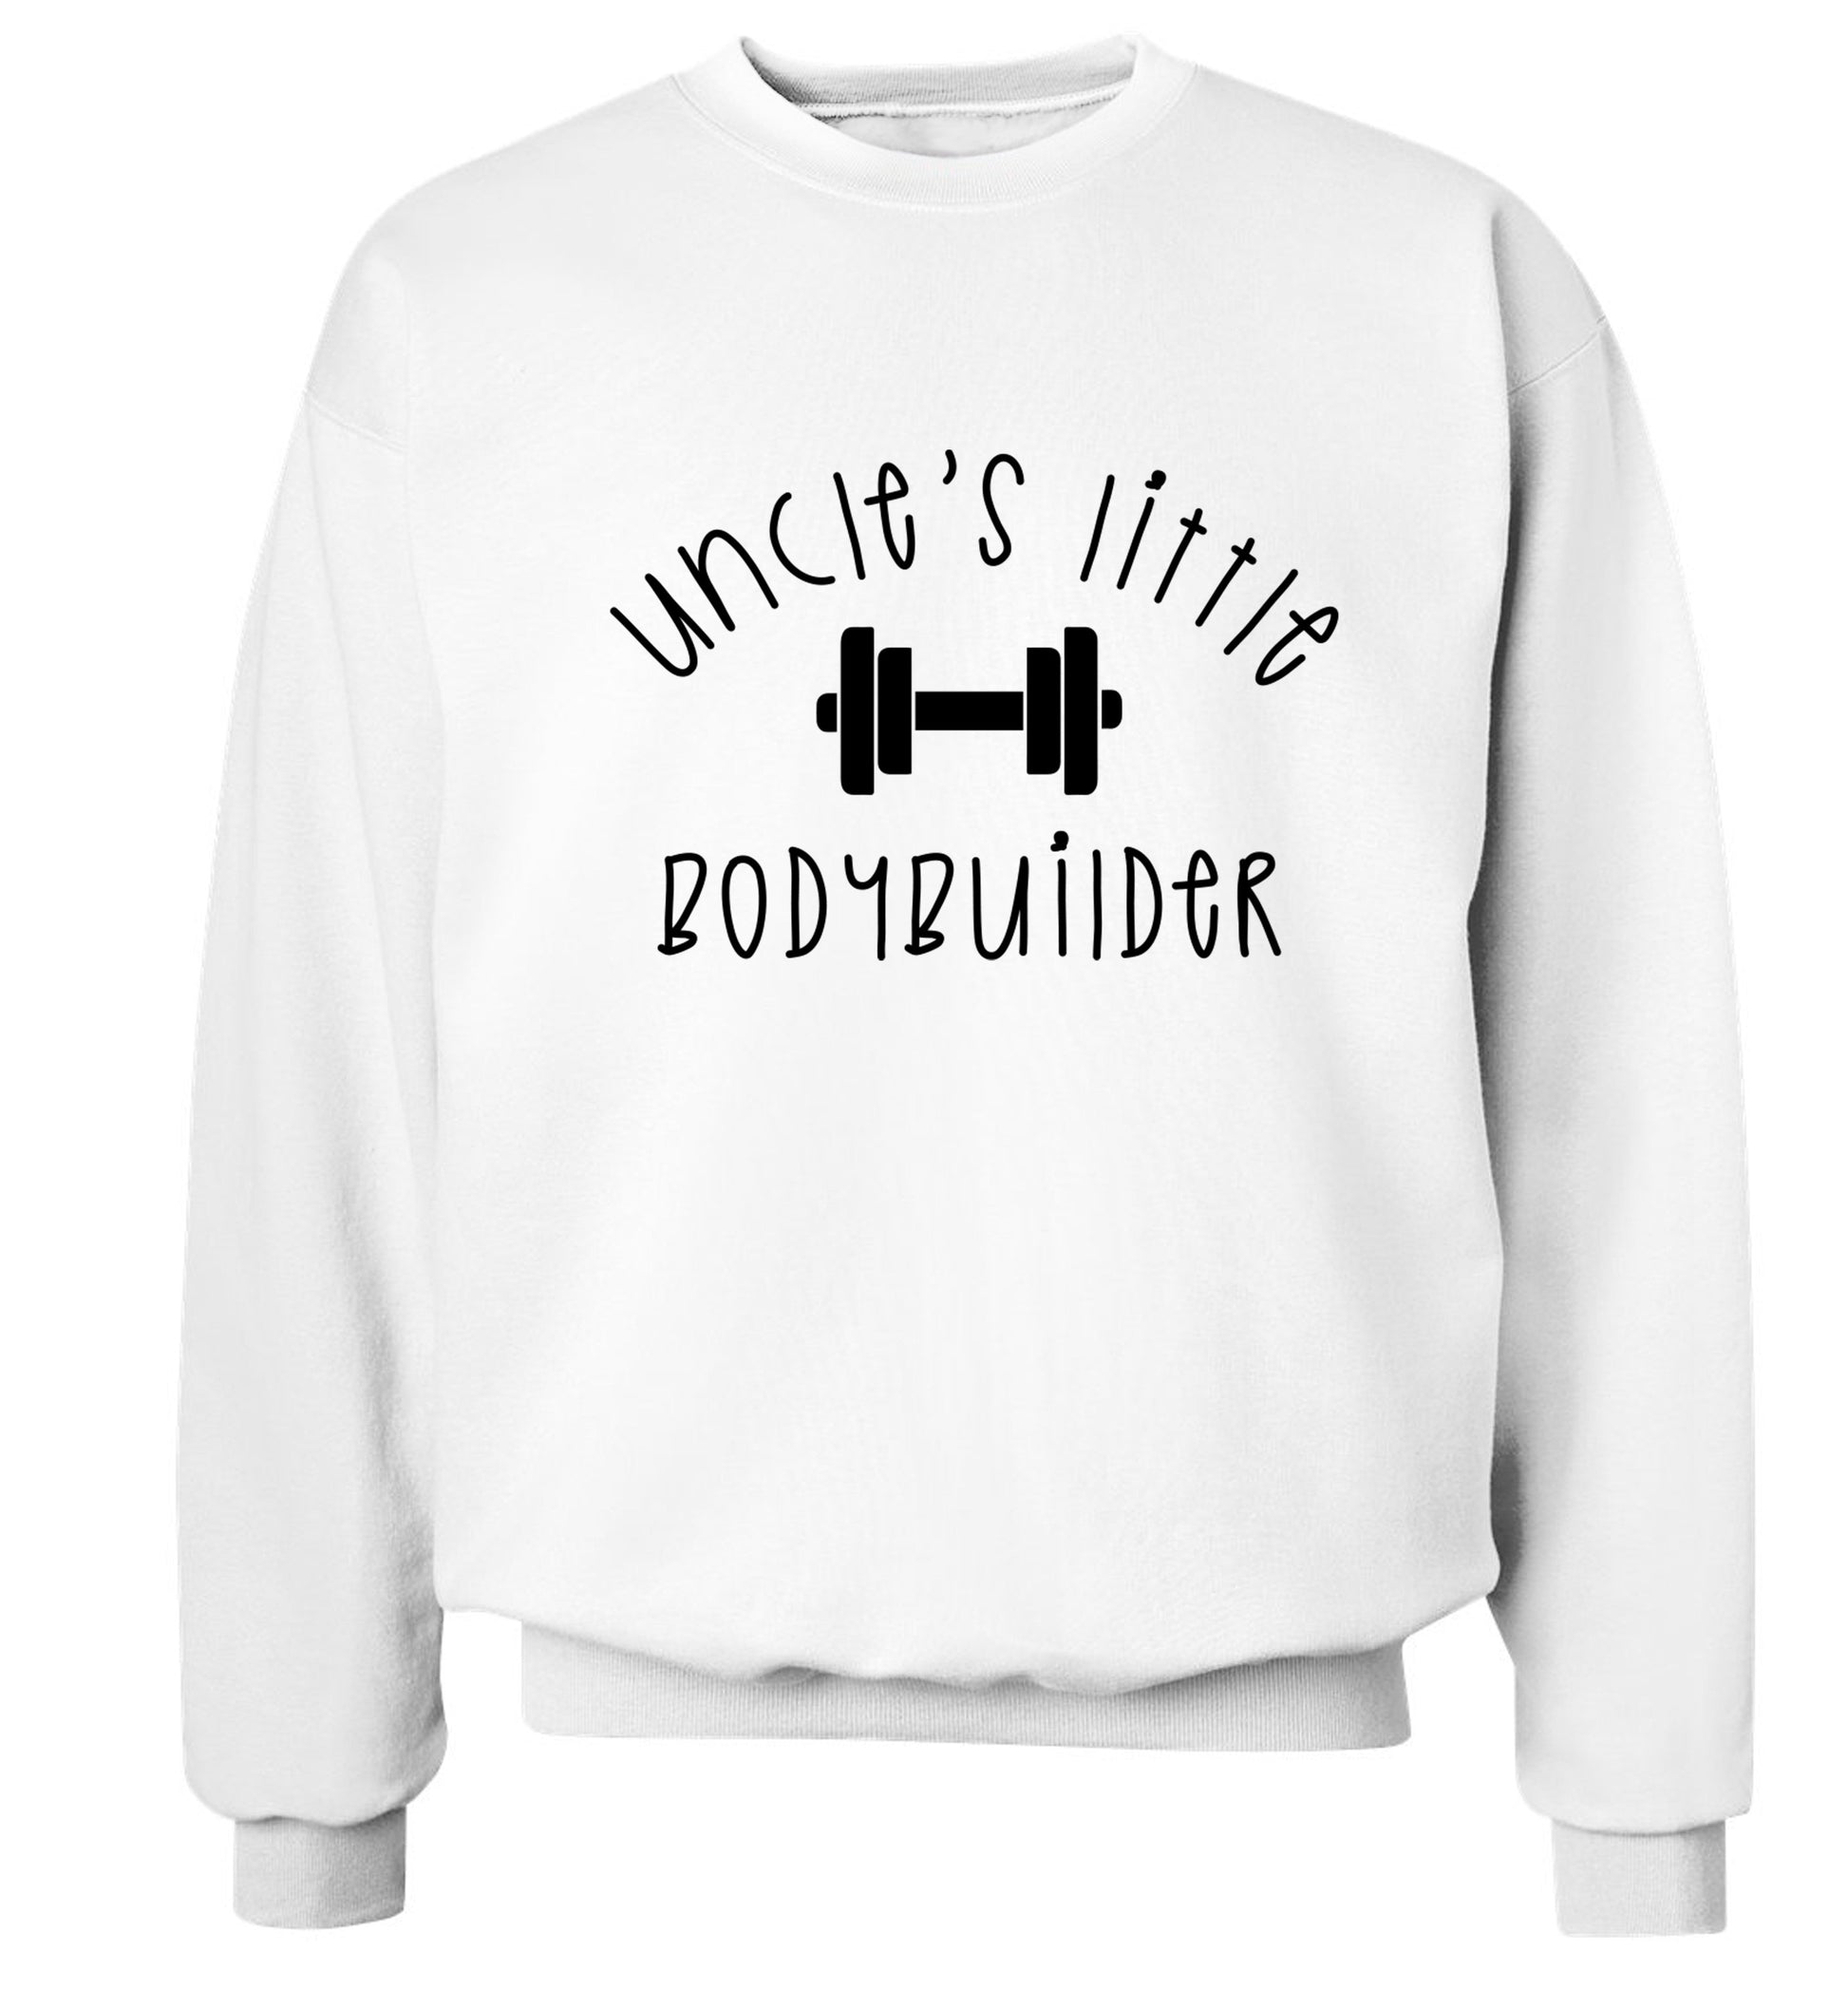 Uncle's little bodybuilder Adult's unisex white Sweater 2XL